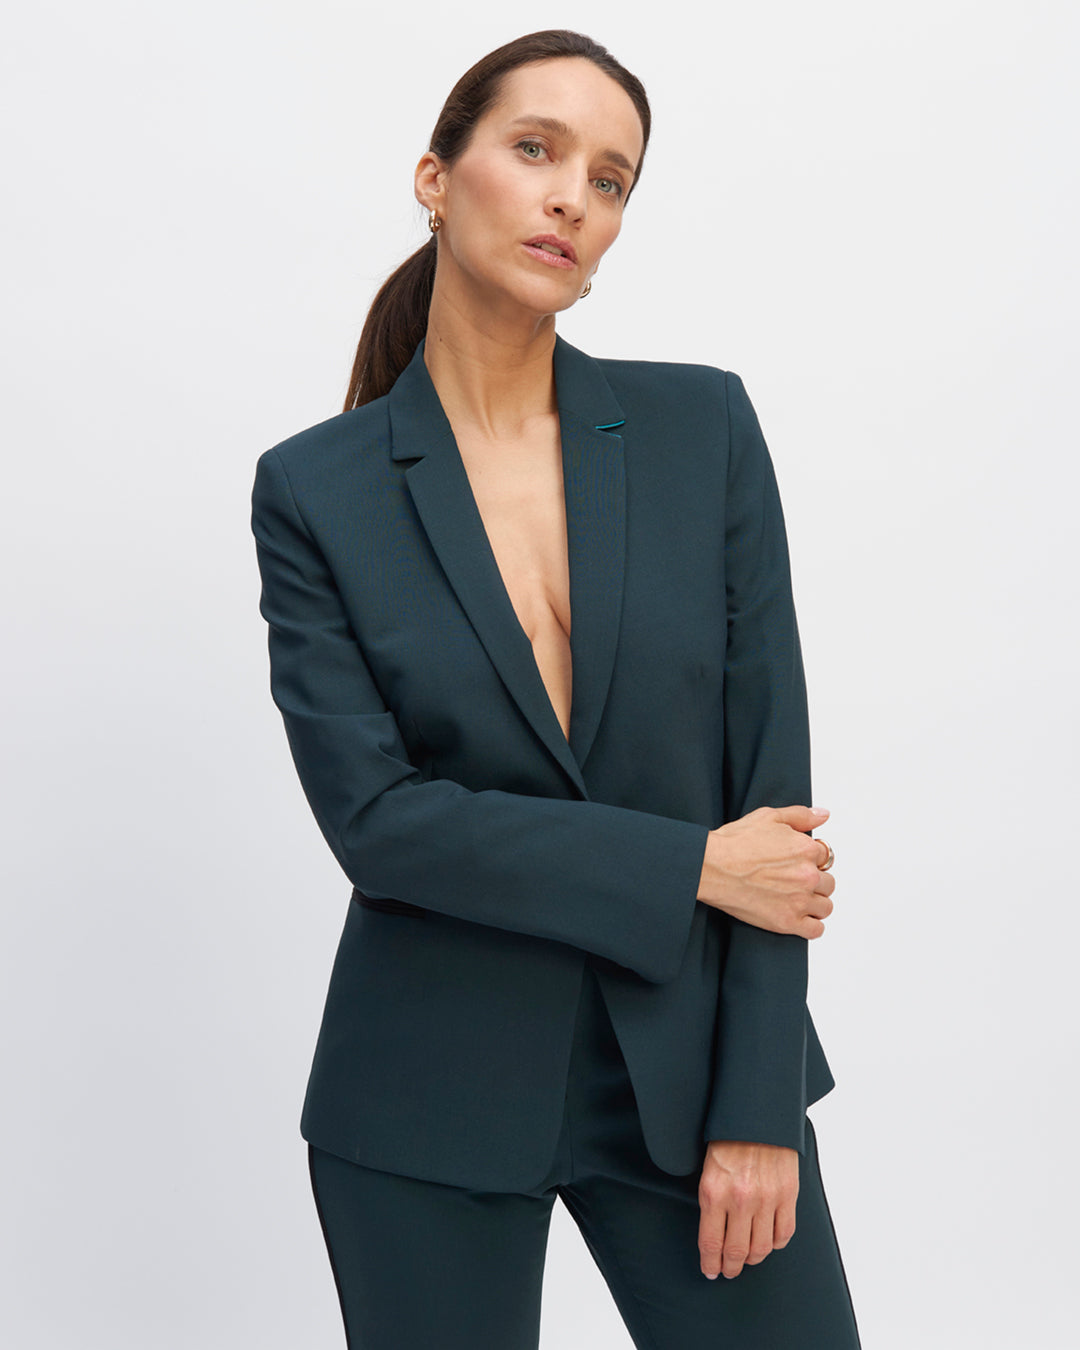 Jacket-suit-blazer-green-cut-suit-collar-suit-length-below-bottom-two-pockets-under-bottom-two-pockets-17H10-suit-jacket-for-women-paris-